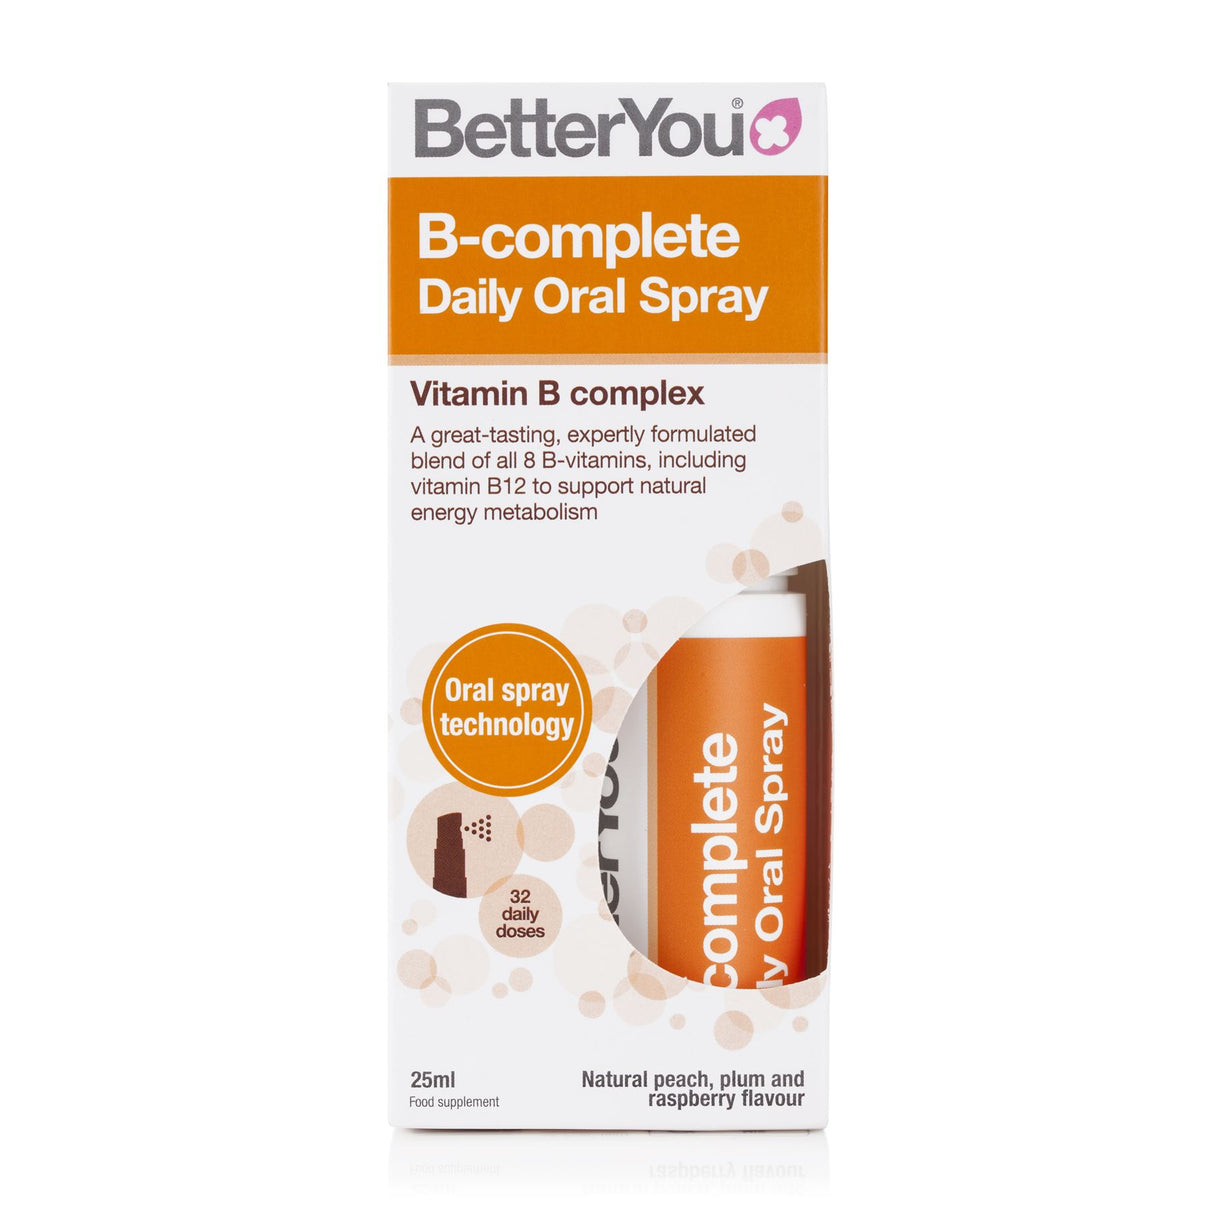 BetterYou Vitamin B-complete Daily Oral Spray - 25ml